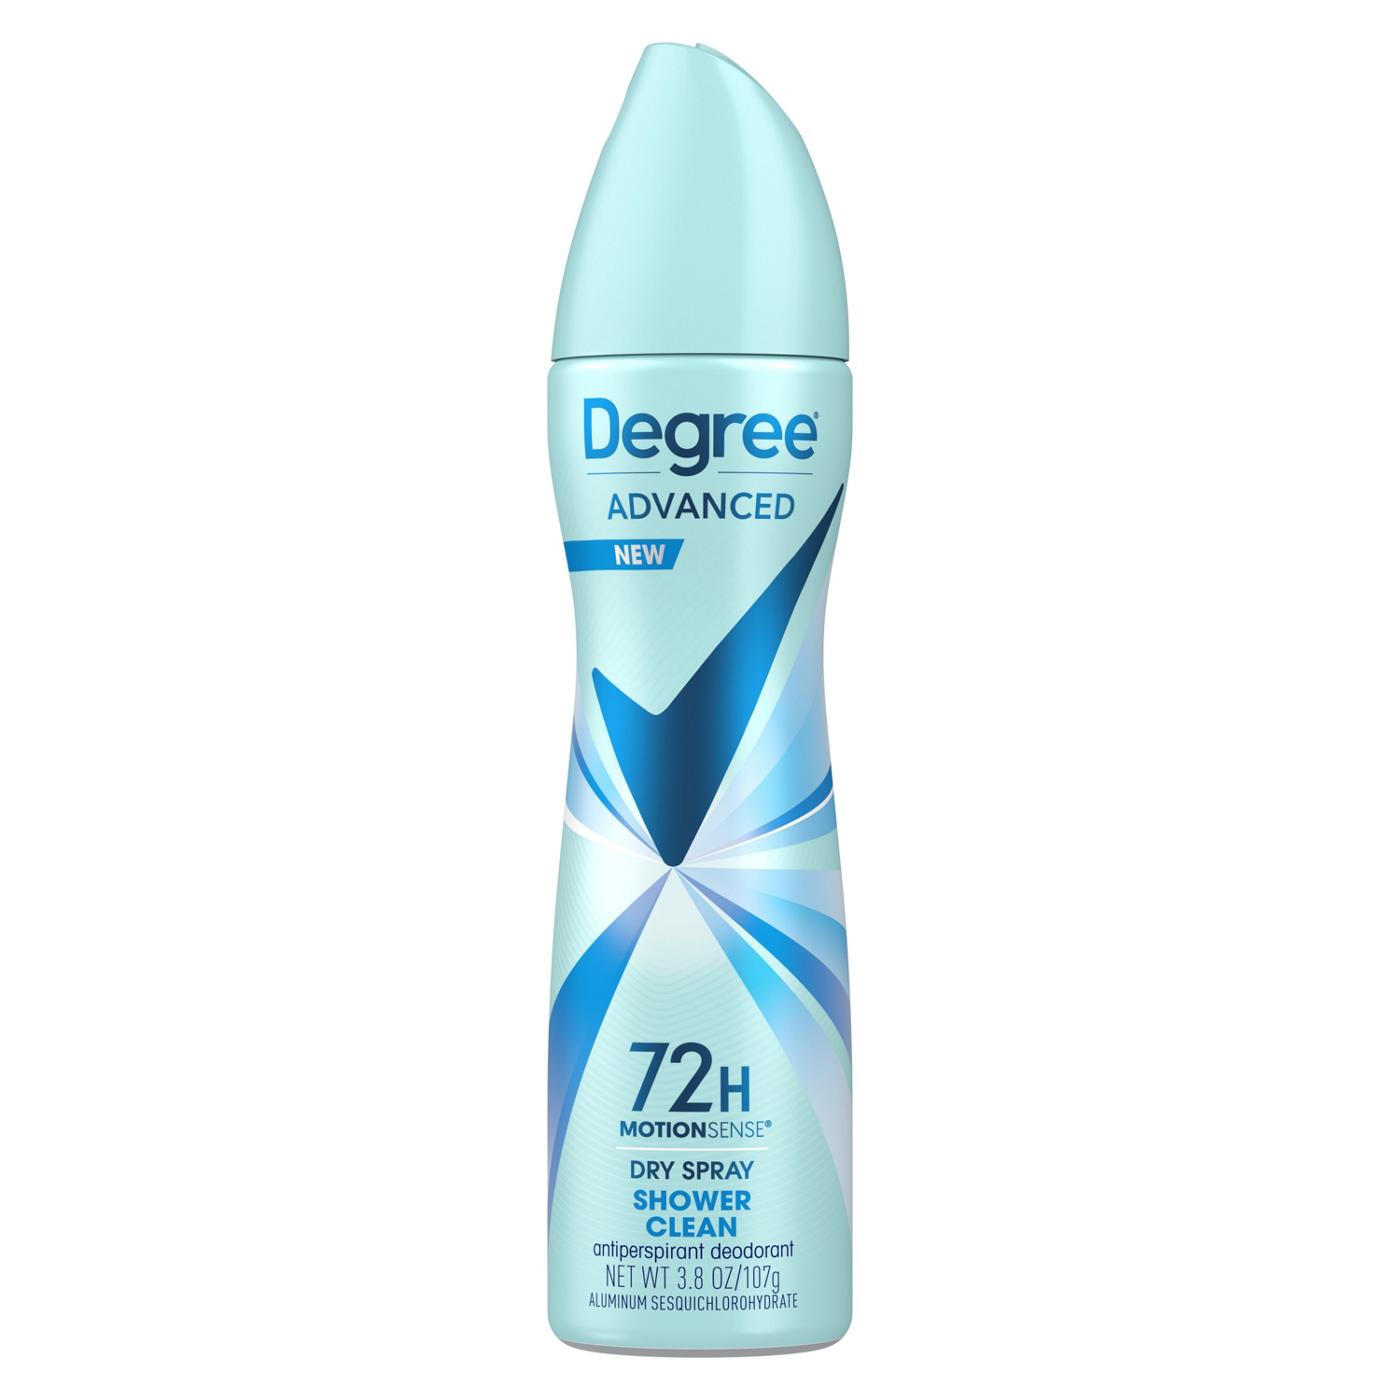 Degree Advanced Antiperspirant Deodorant Dry Spray Shower Clean; image 1 of 3